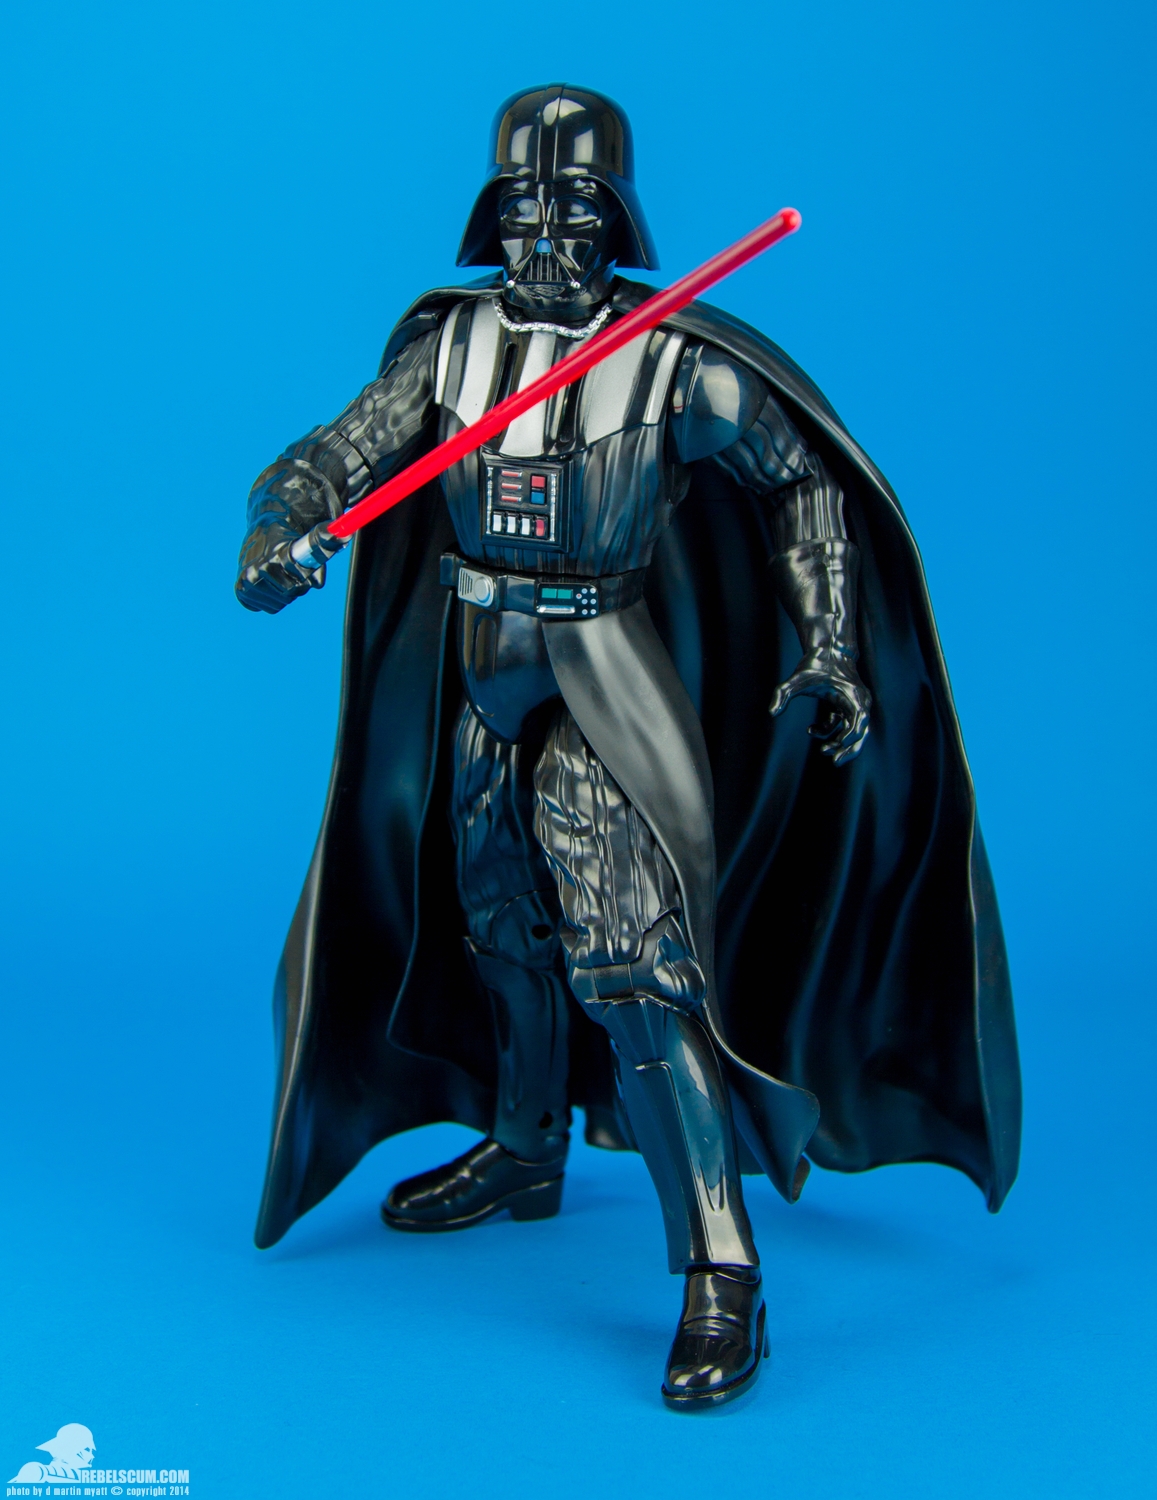 Darth-Vader-Talking-Disney-Store-Exclusive-Star-Wars-009.jpg